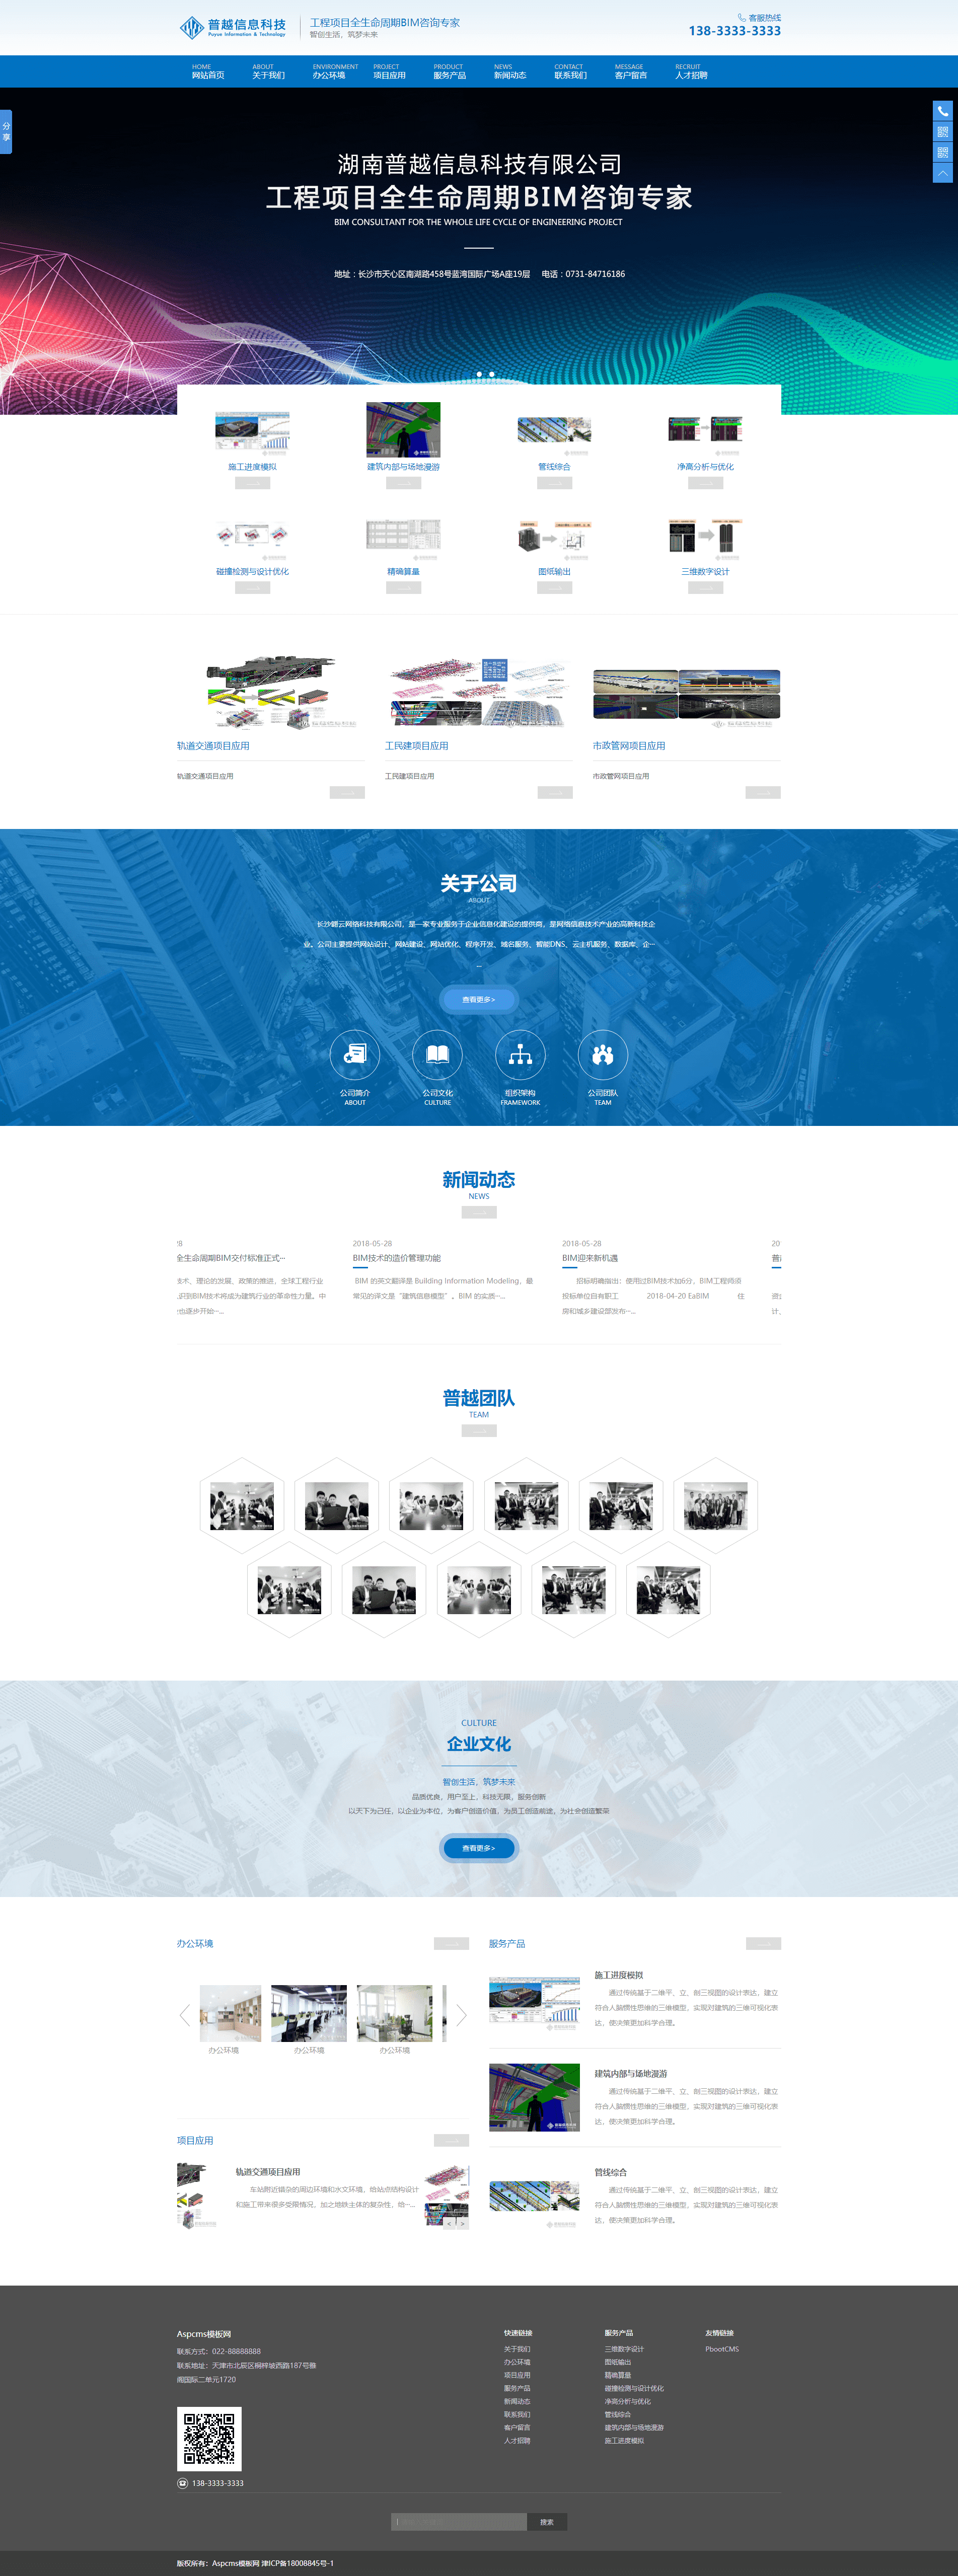 Pbootcms工程项目信息科技网站模板